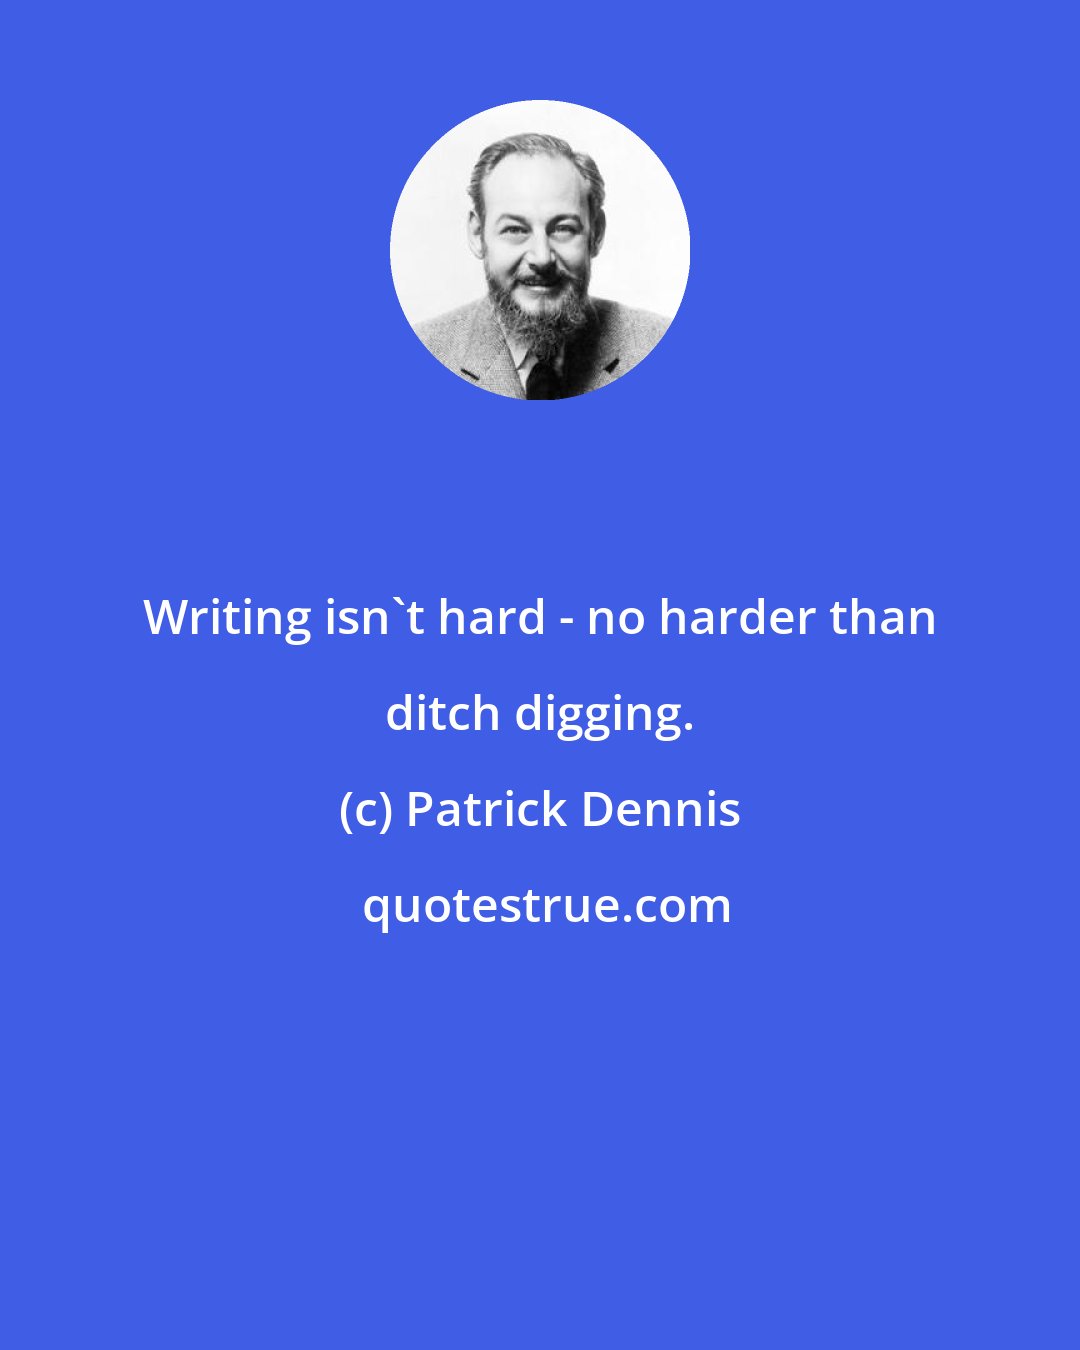 Patrick Dennis: Writing isn't hard - no harder than ditch digging.